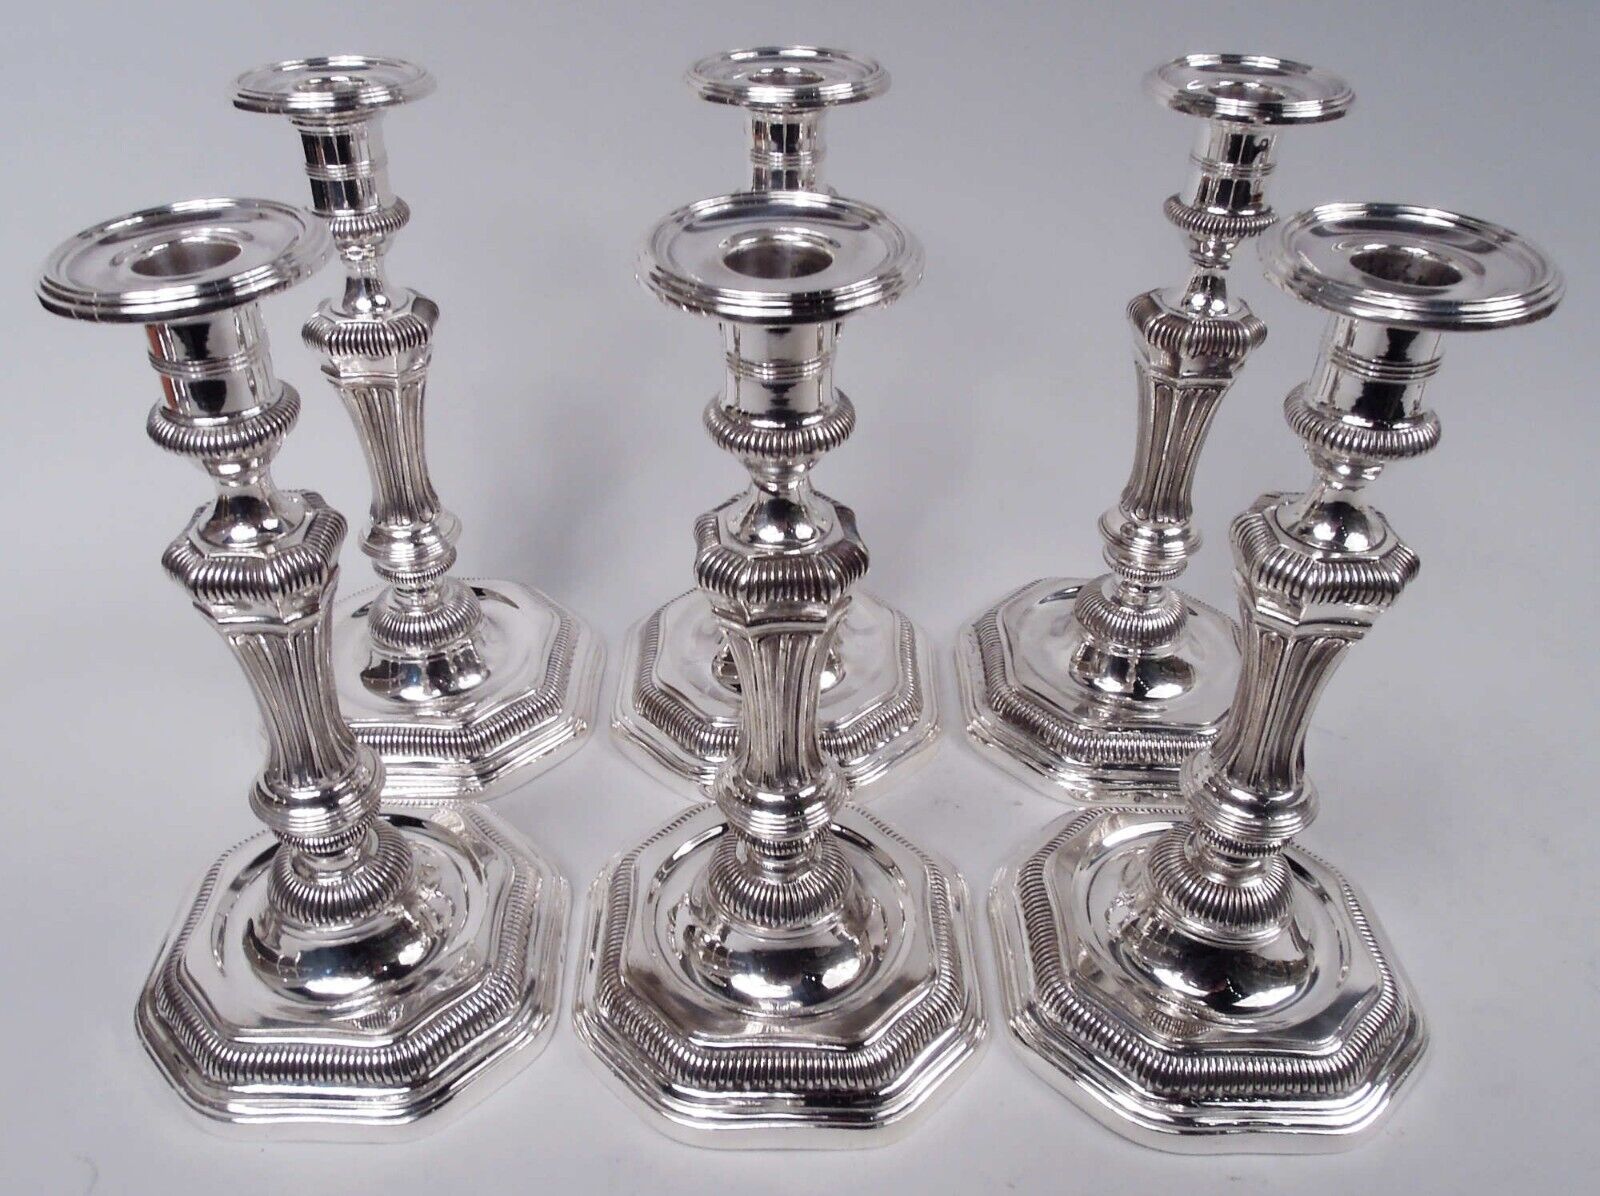 Boin-Taburet Gruhier Candlesticks Belle Epoque Louis XVI Seize French 950 Silver